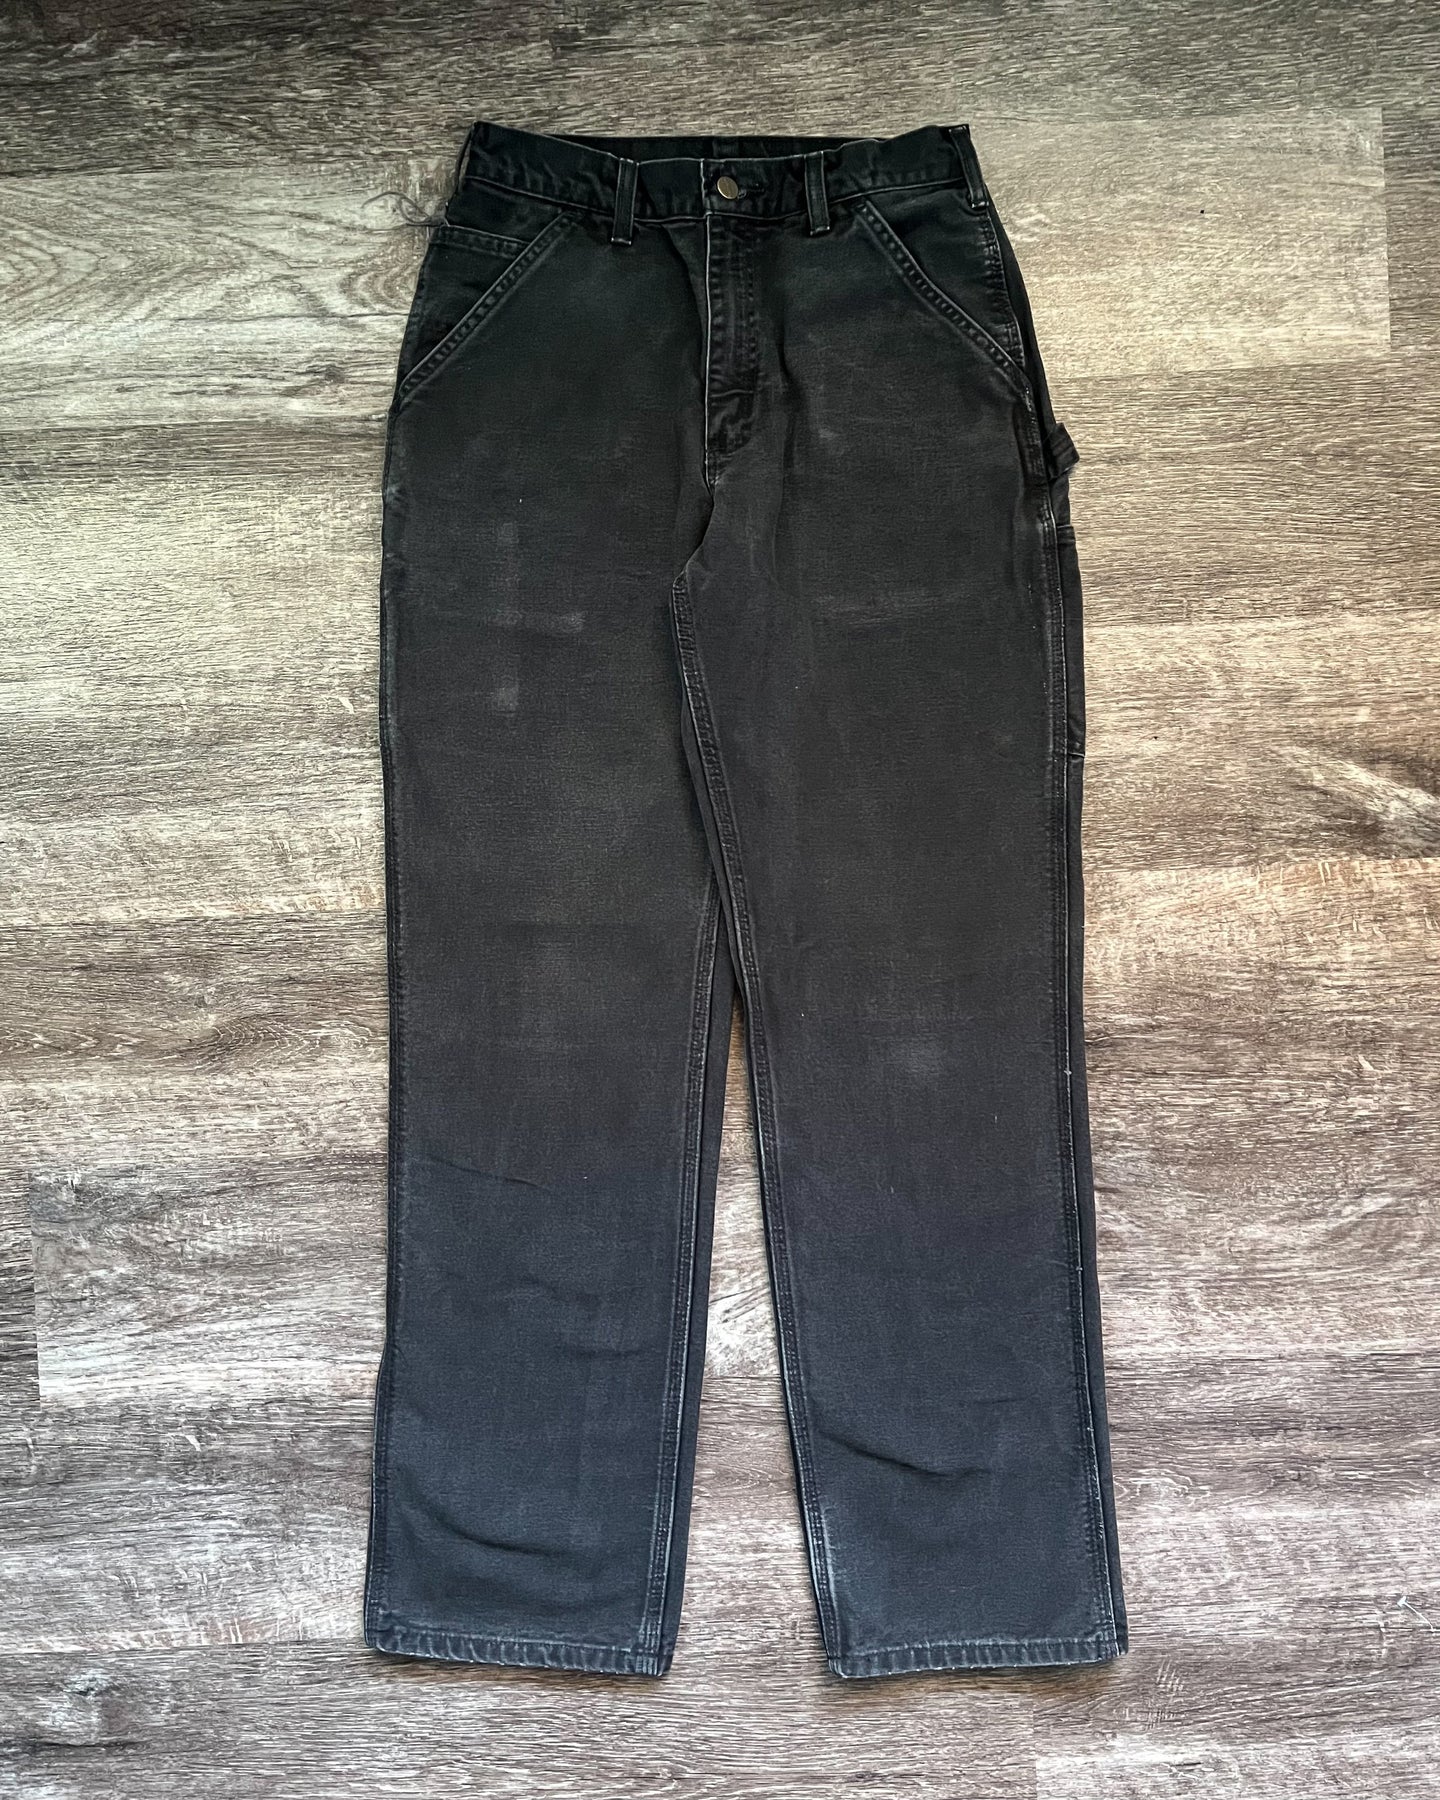 Carhartt Black Single Knee Carpenter Pants - Size 27 x 33